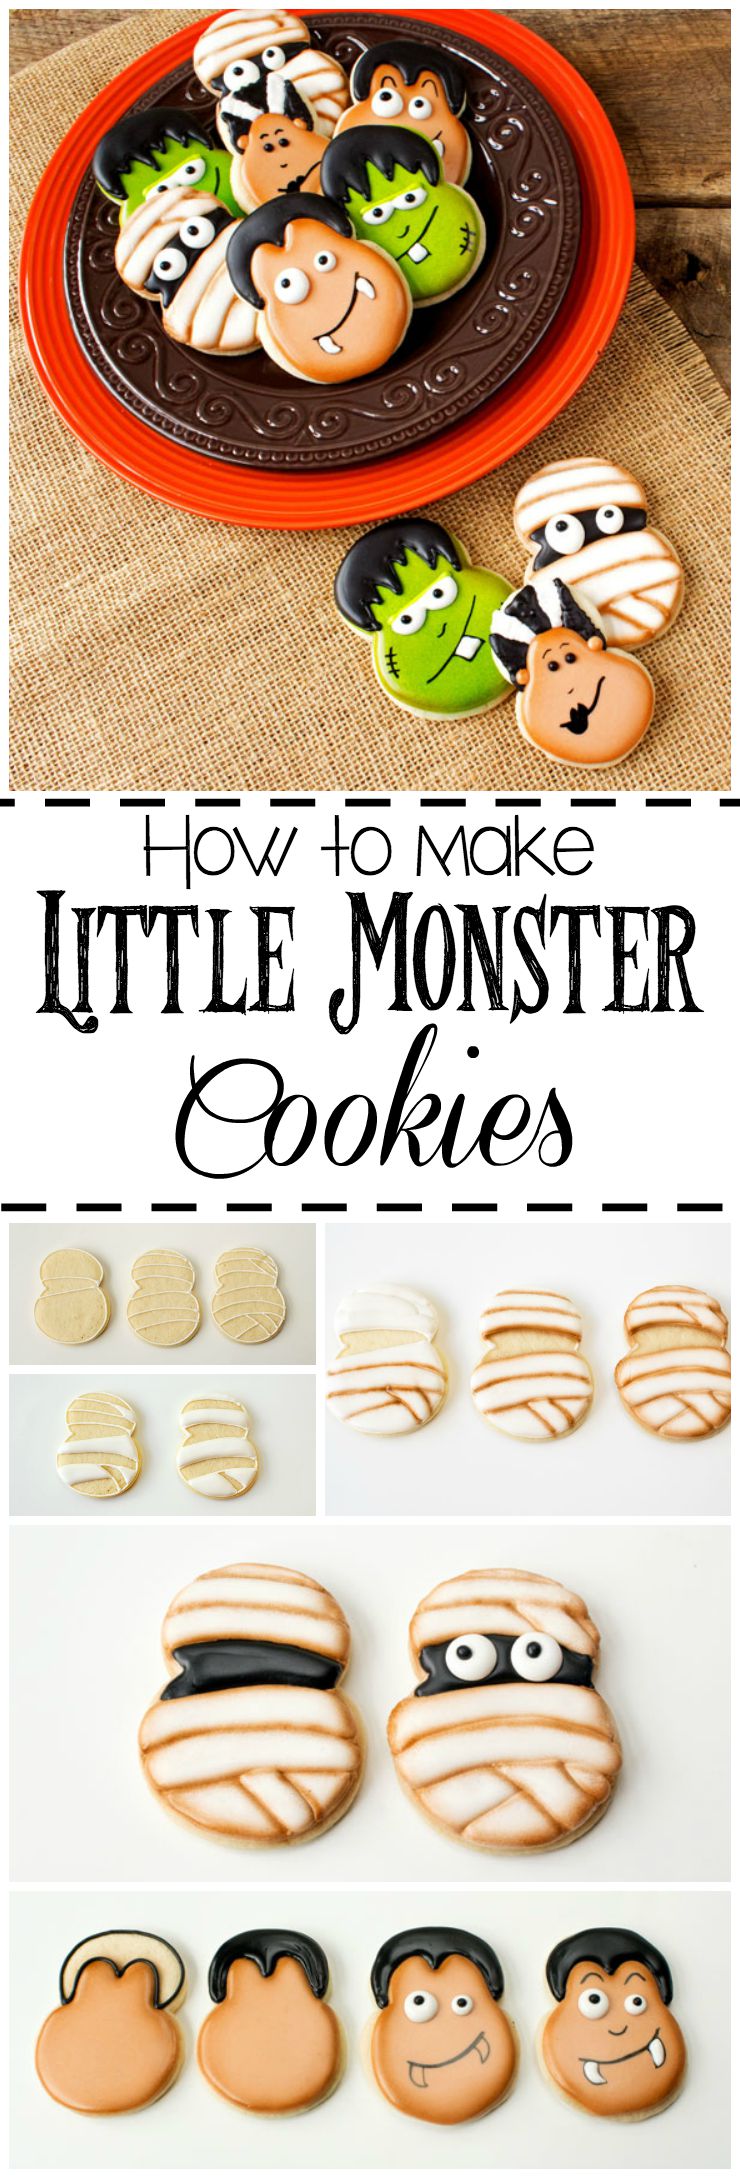 How to Make Little Monster Cookies via www.thebearfootbaker.com